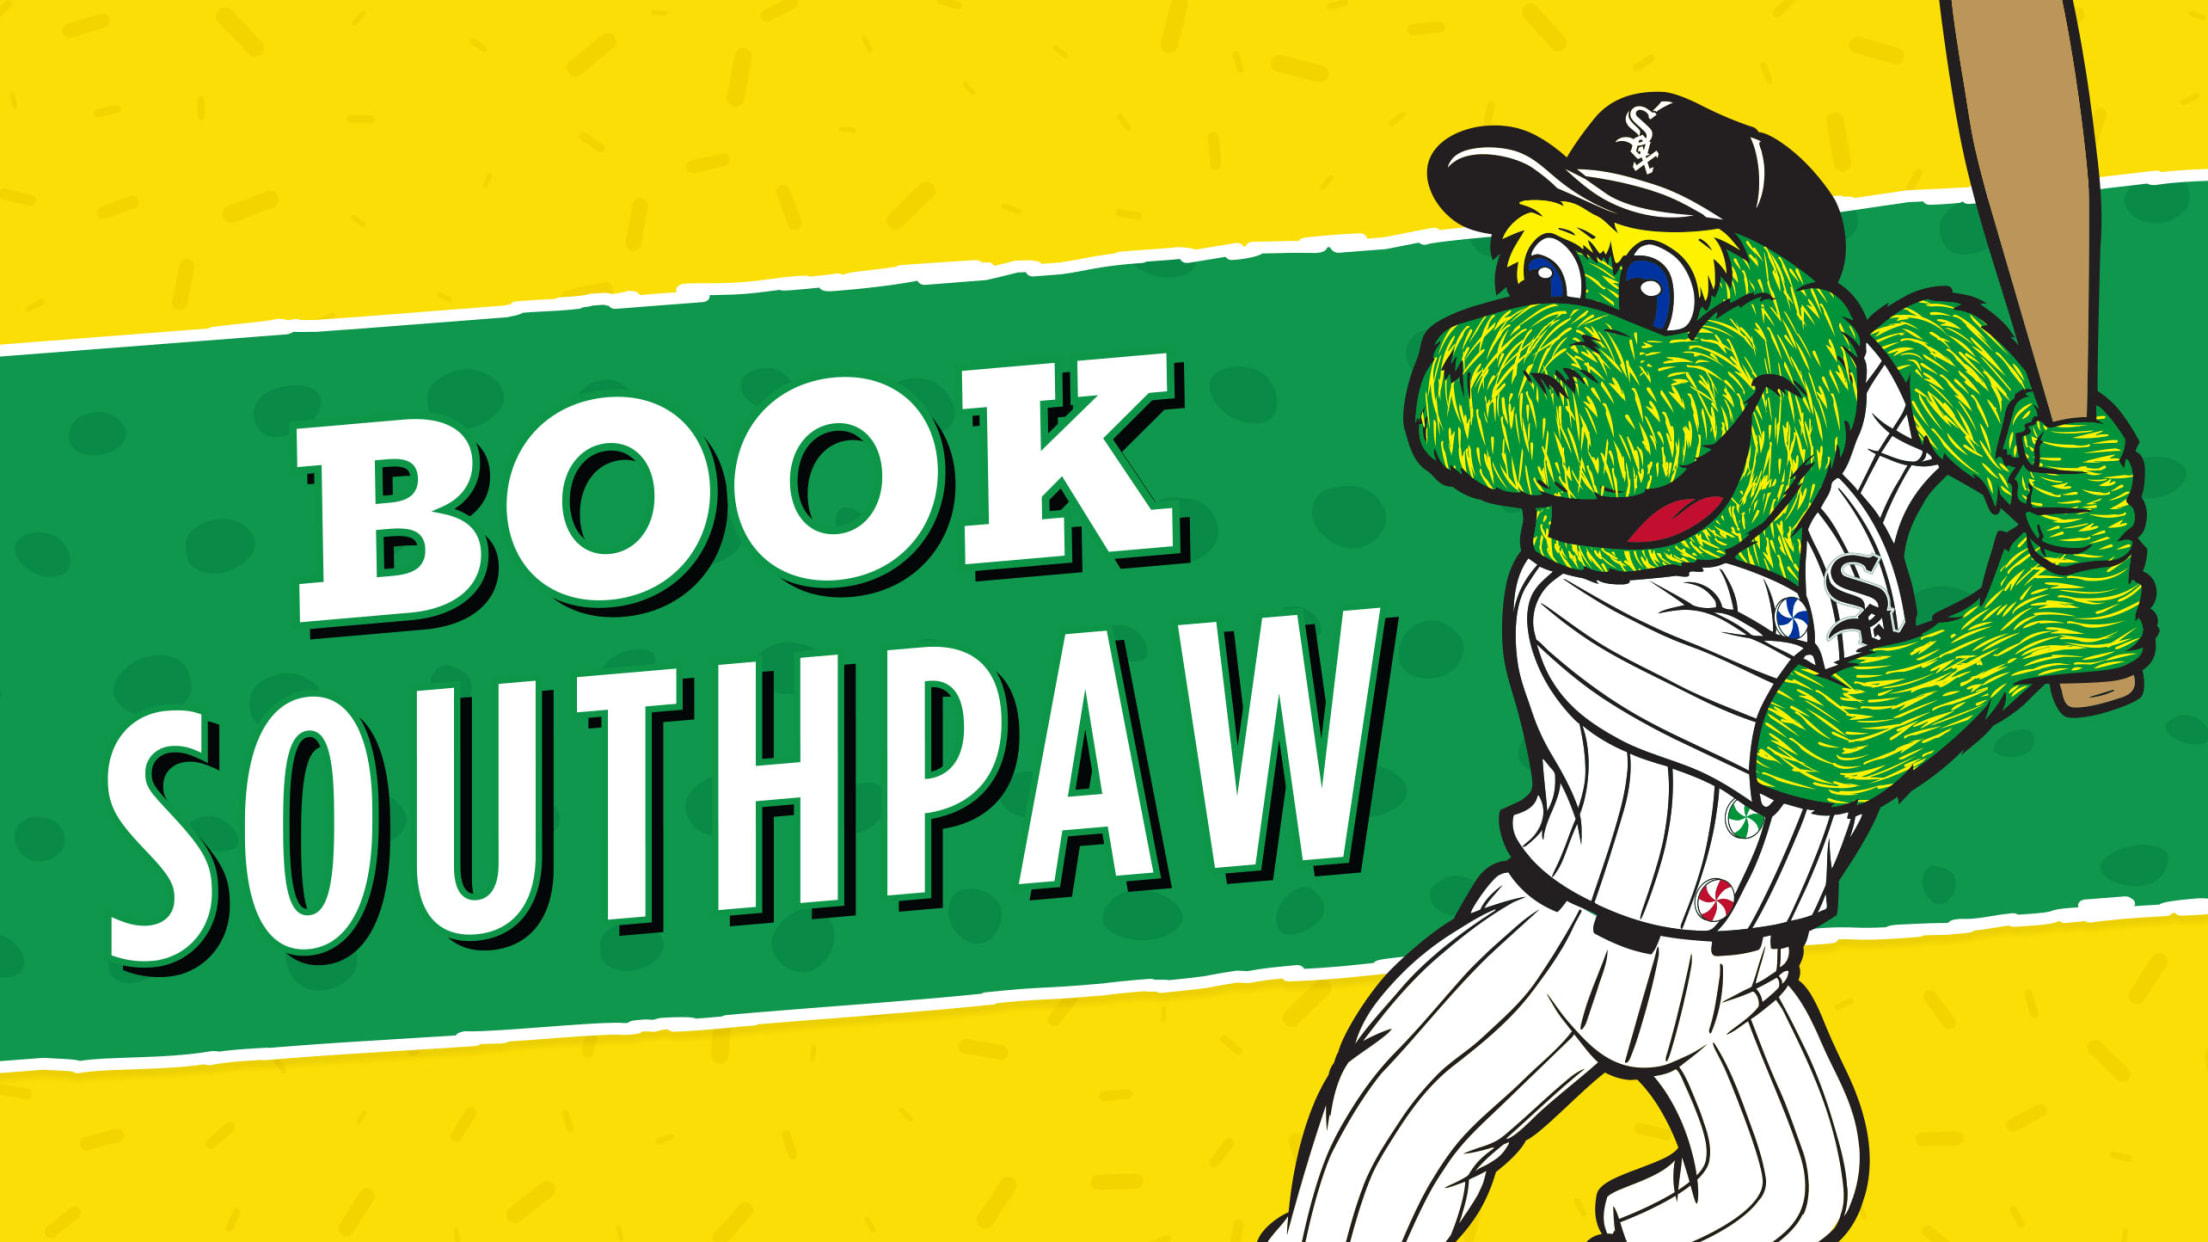 southpaw mascot cartoon